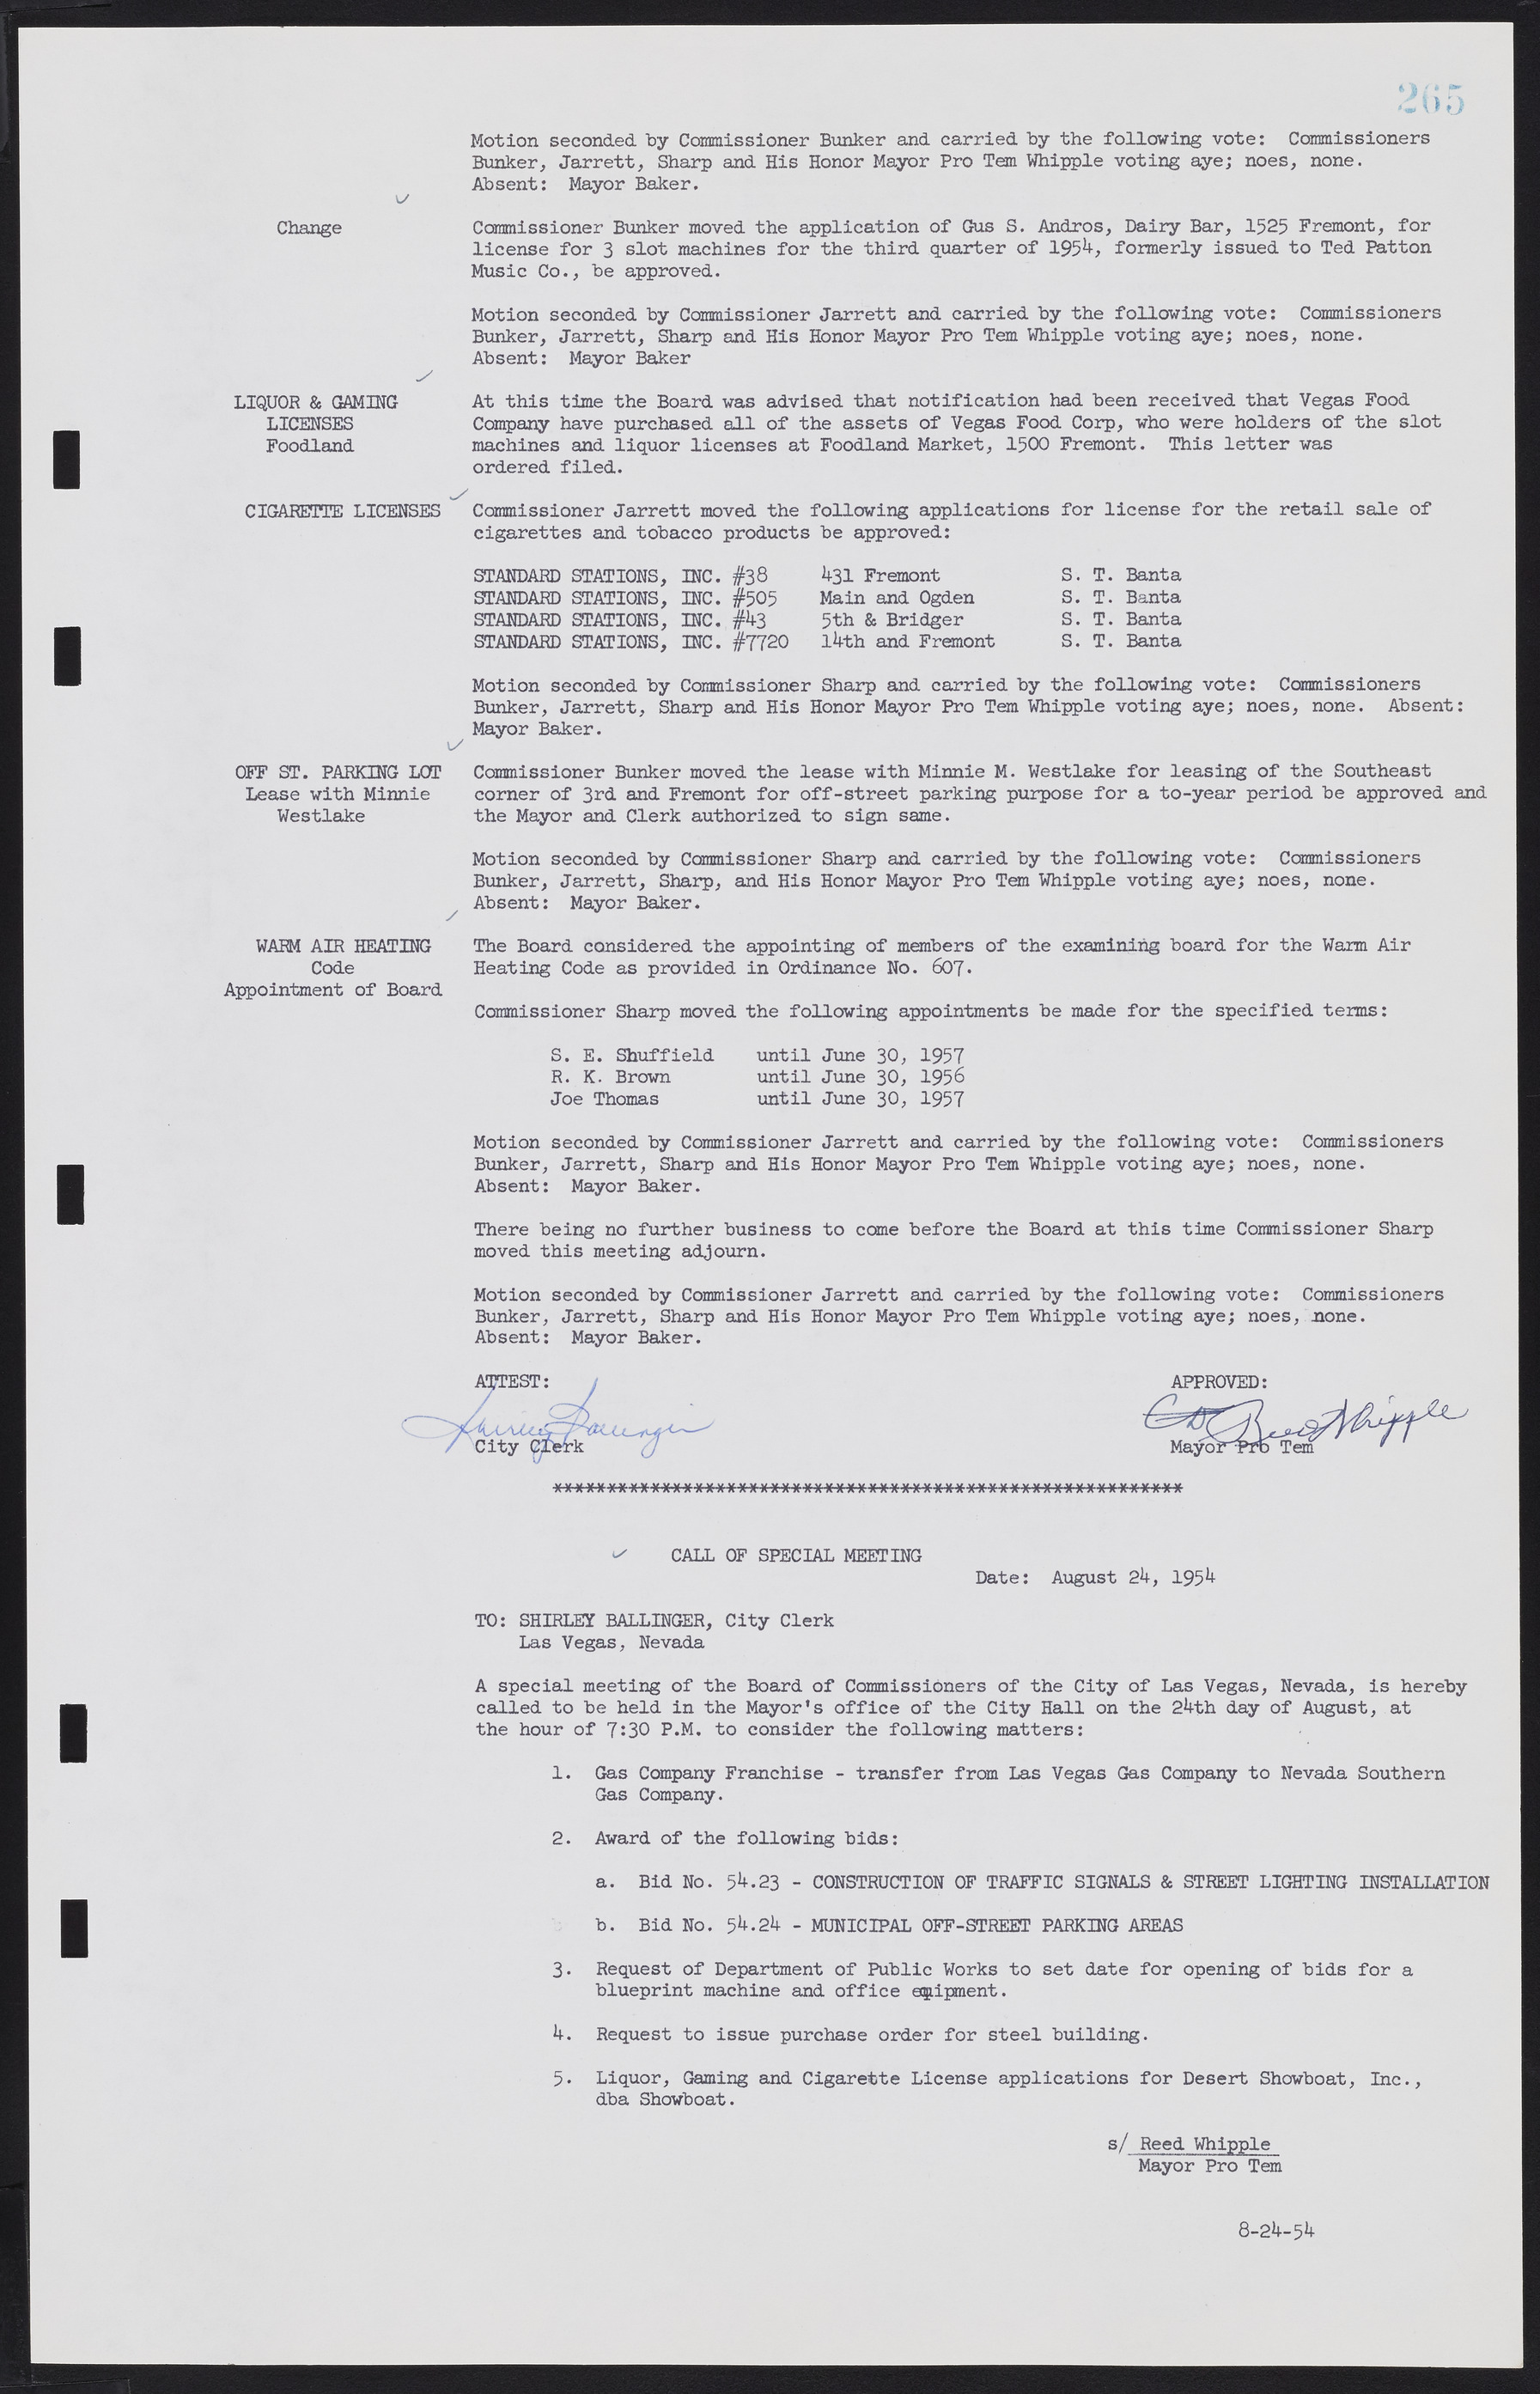 Las Vegas City Commission Minutes, February 17, 1954 to September 21, 1955, lvc000009-271